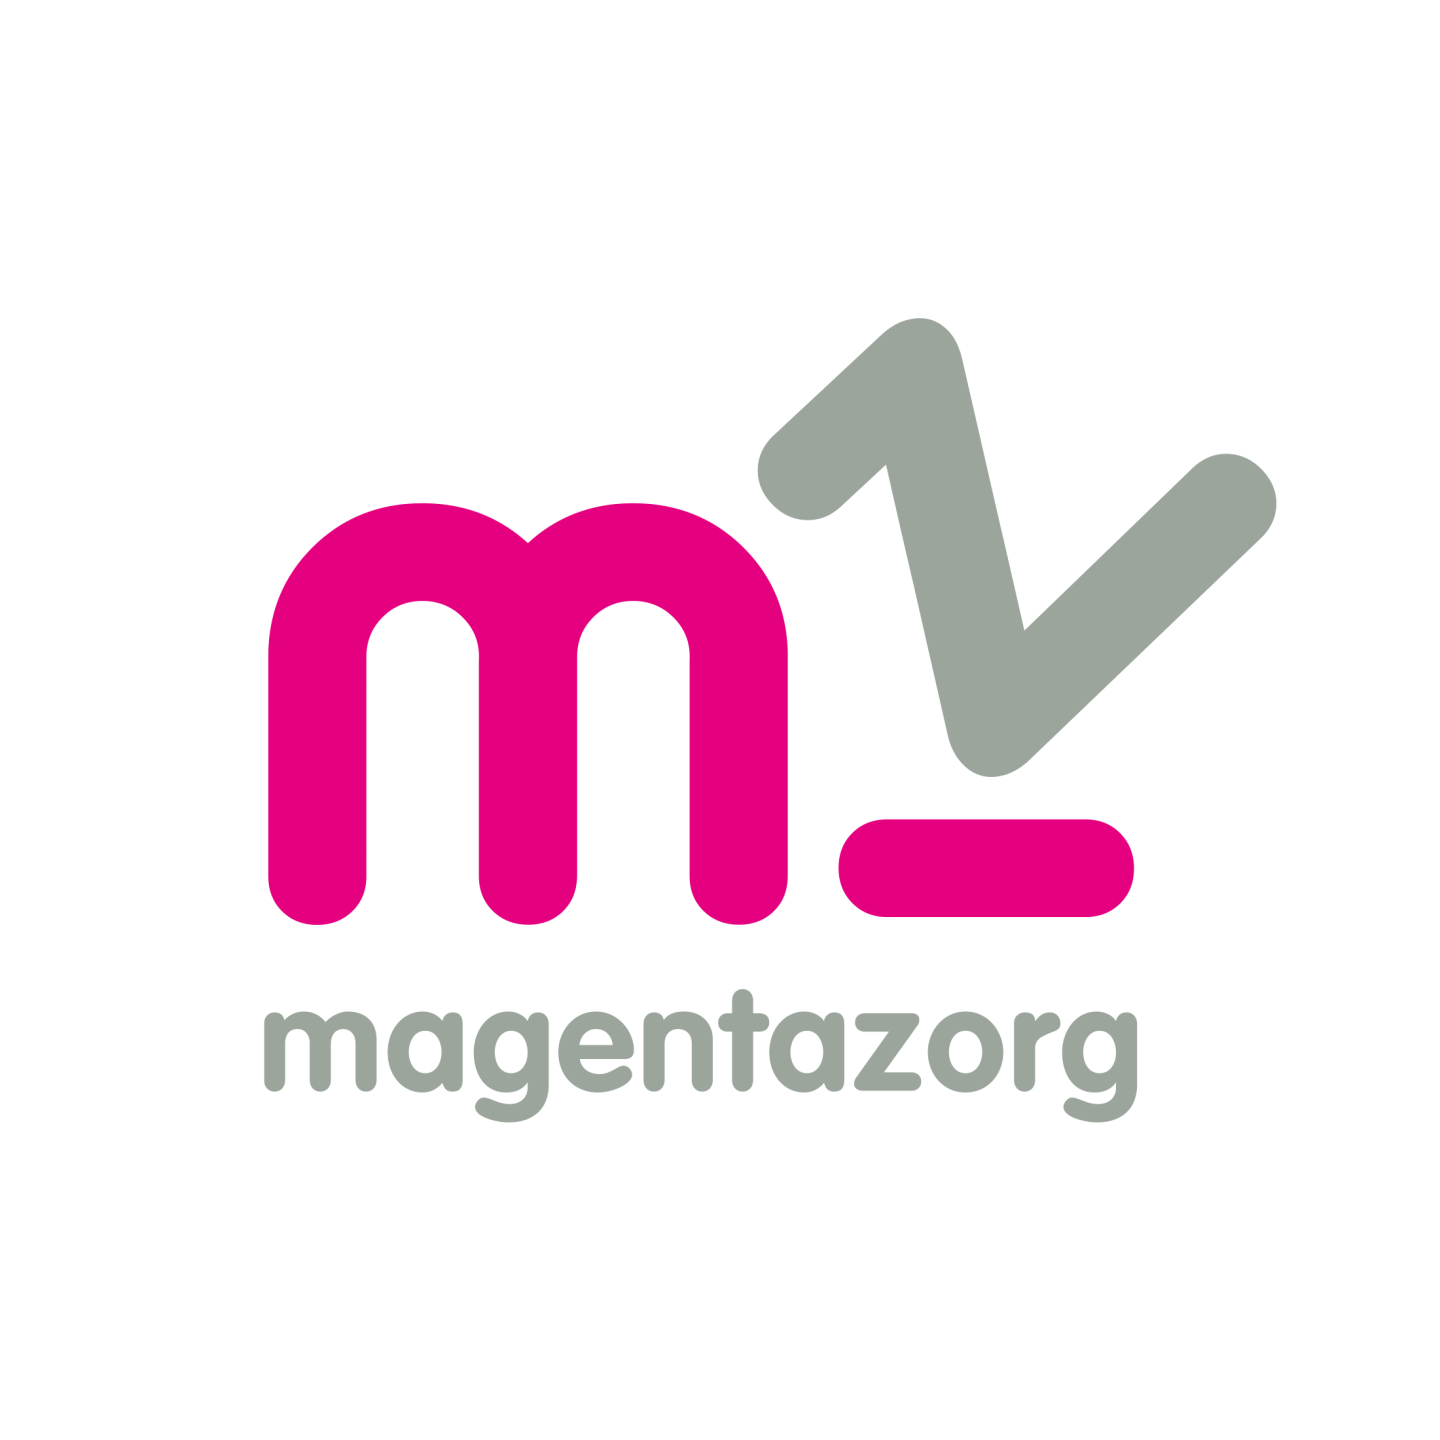 Magentazorg logo